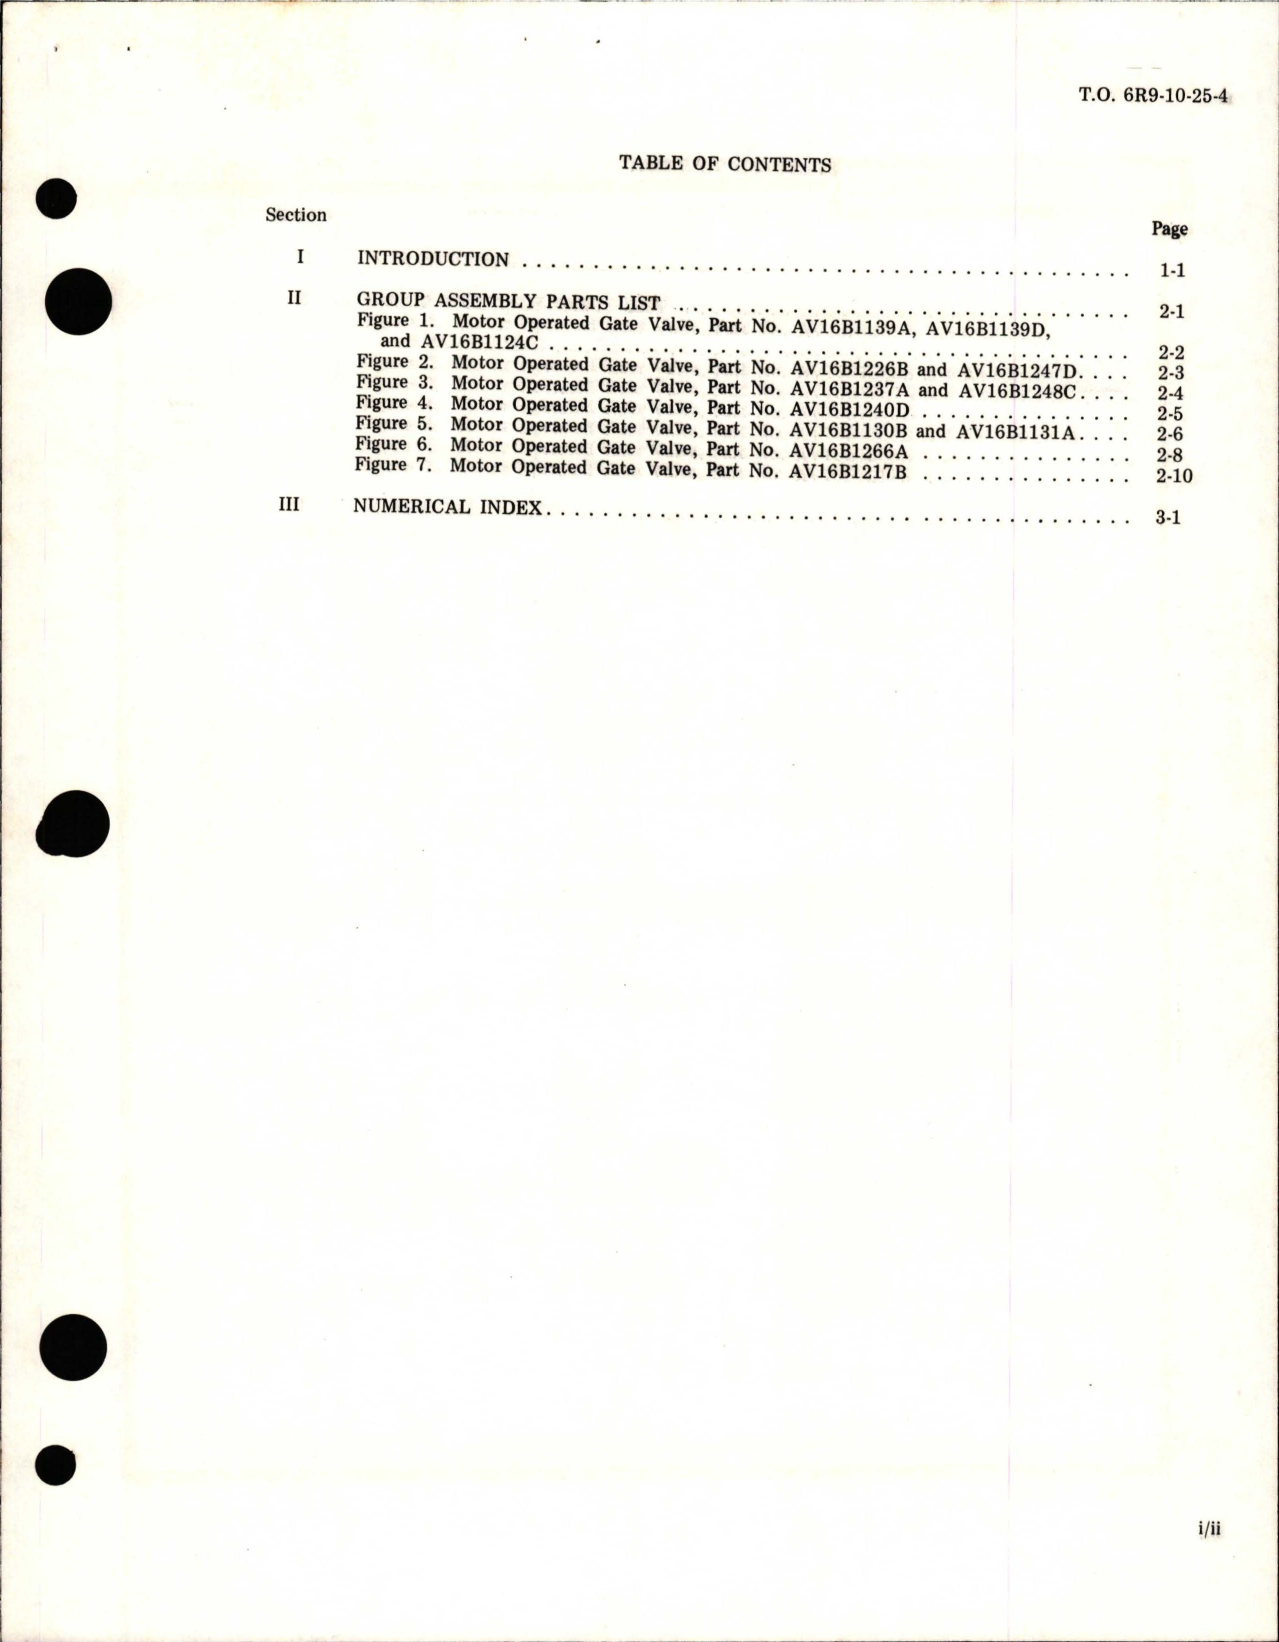 Sample page 5 from AirCorps Library document: Illustrated Parts Breakdown for Motor Operated Gate Valves - AV16B Series - Part AV16B1139A and Similar Valves 